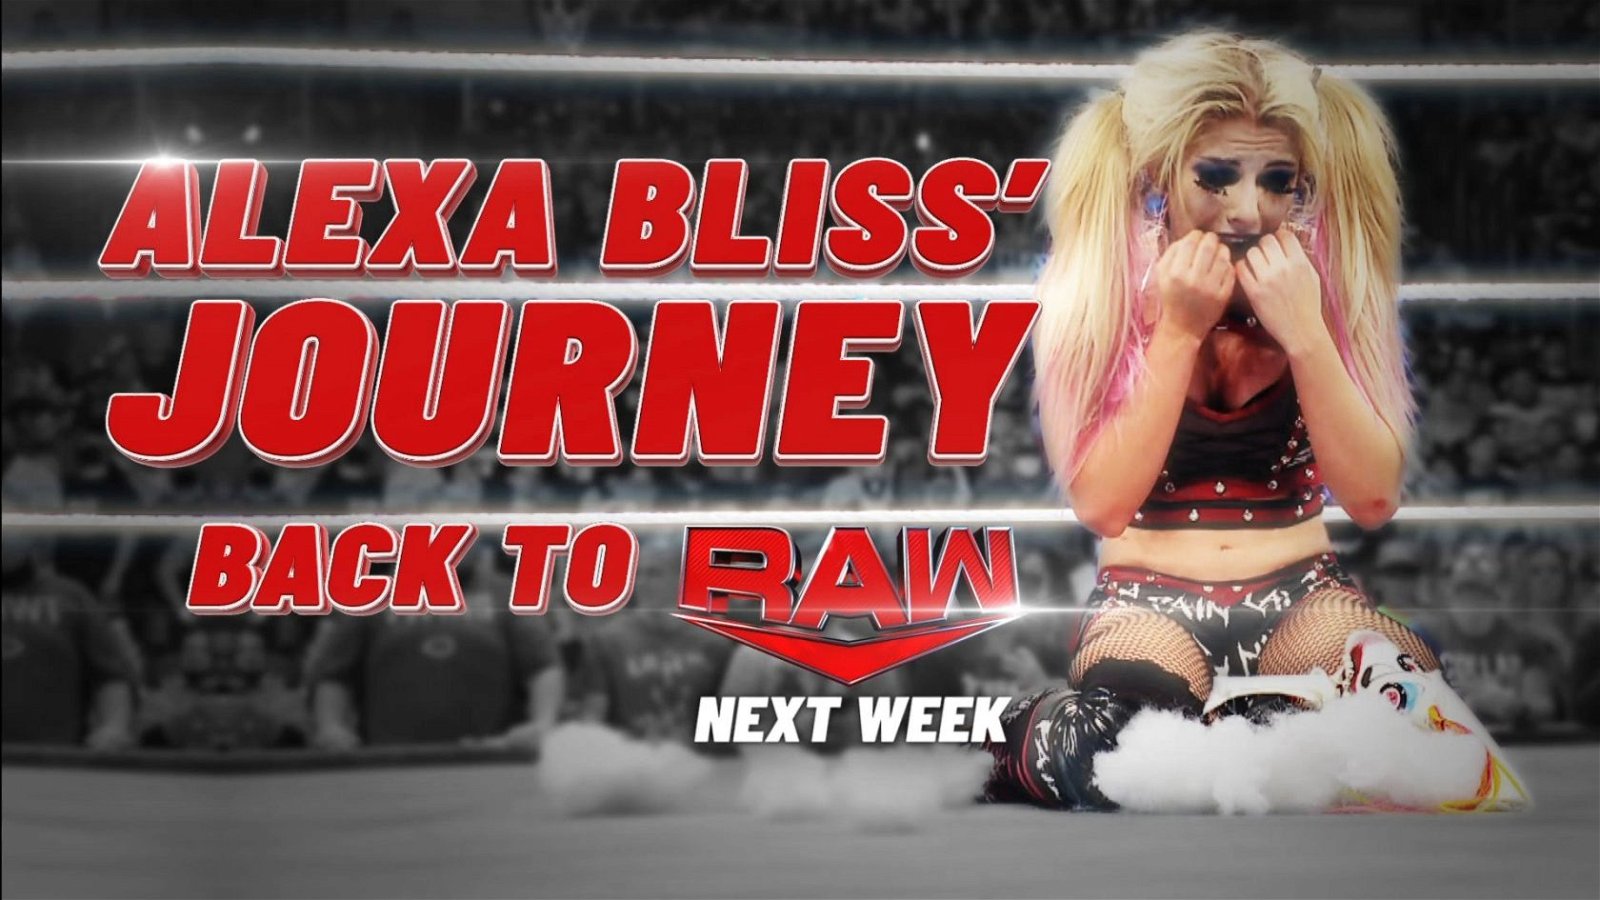 Alexa Bliss Set To Begin ‘Journey Back To Raw’ Next Week